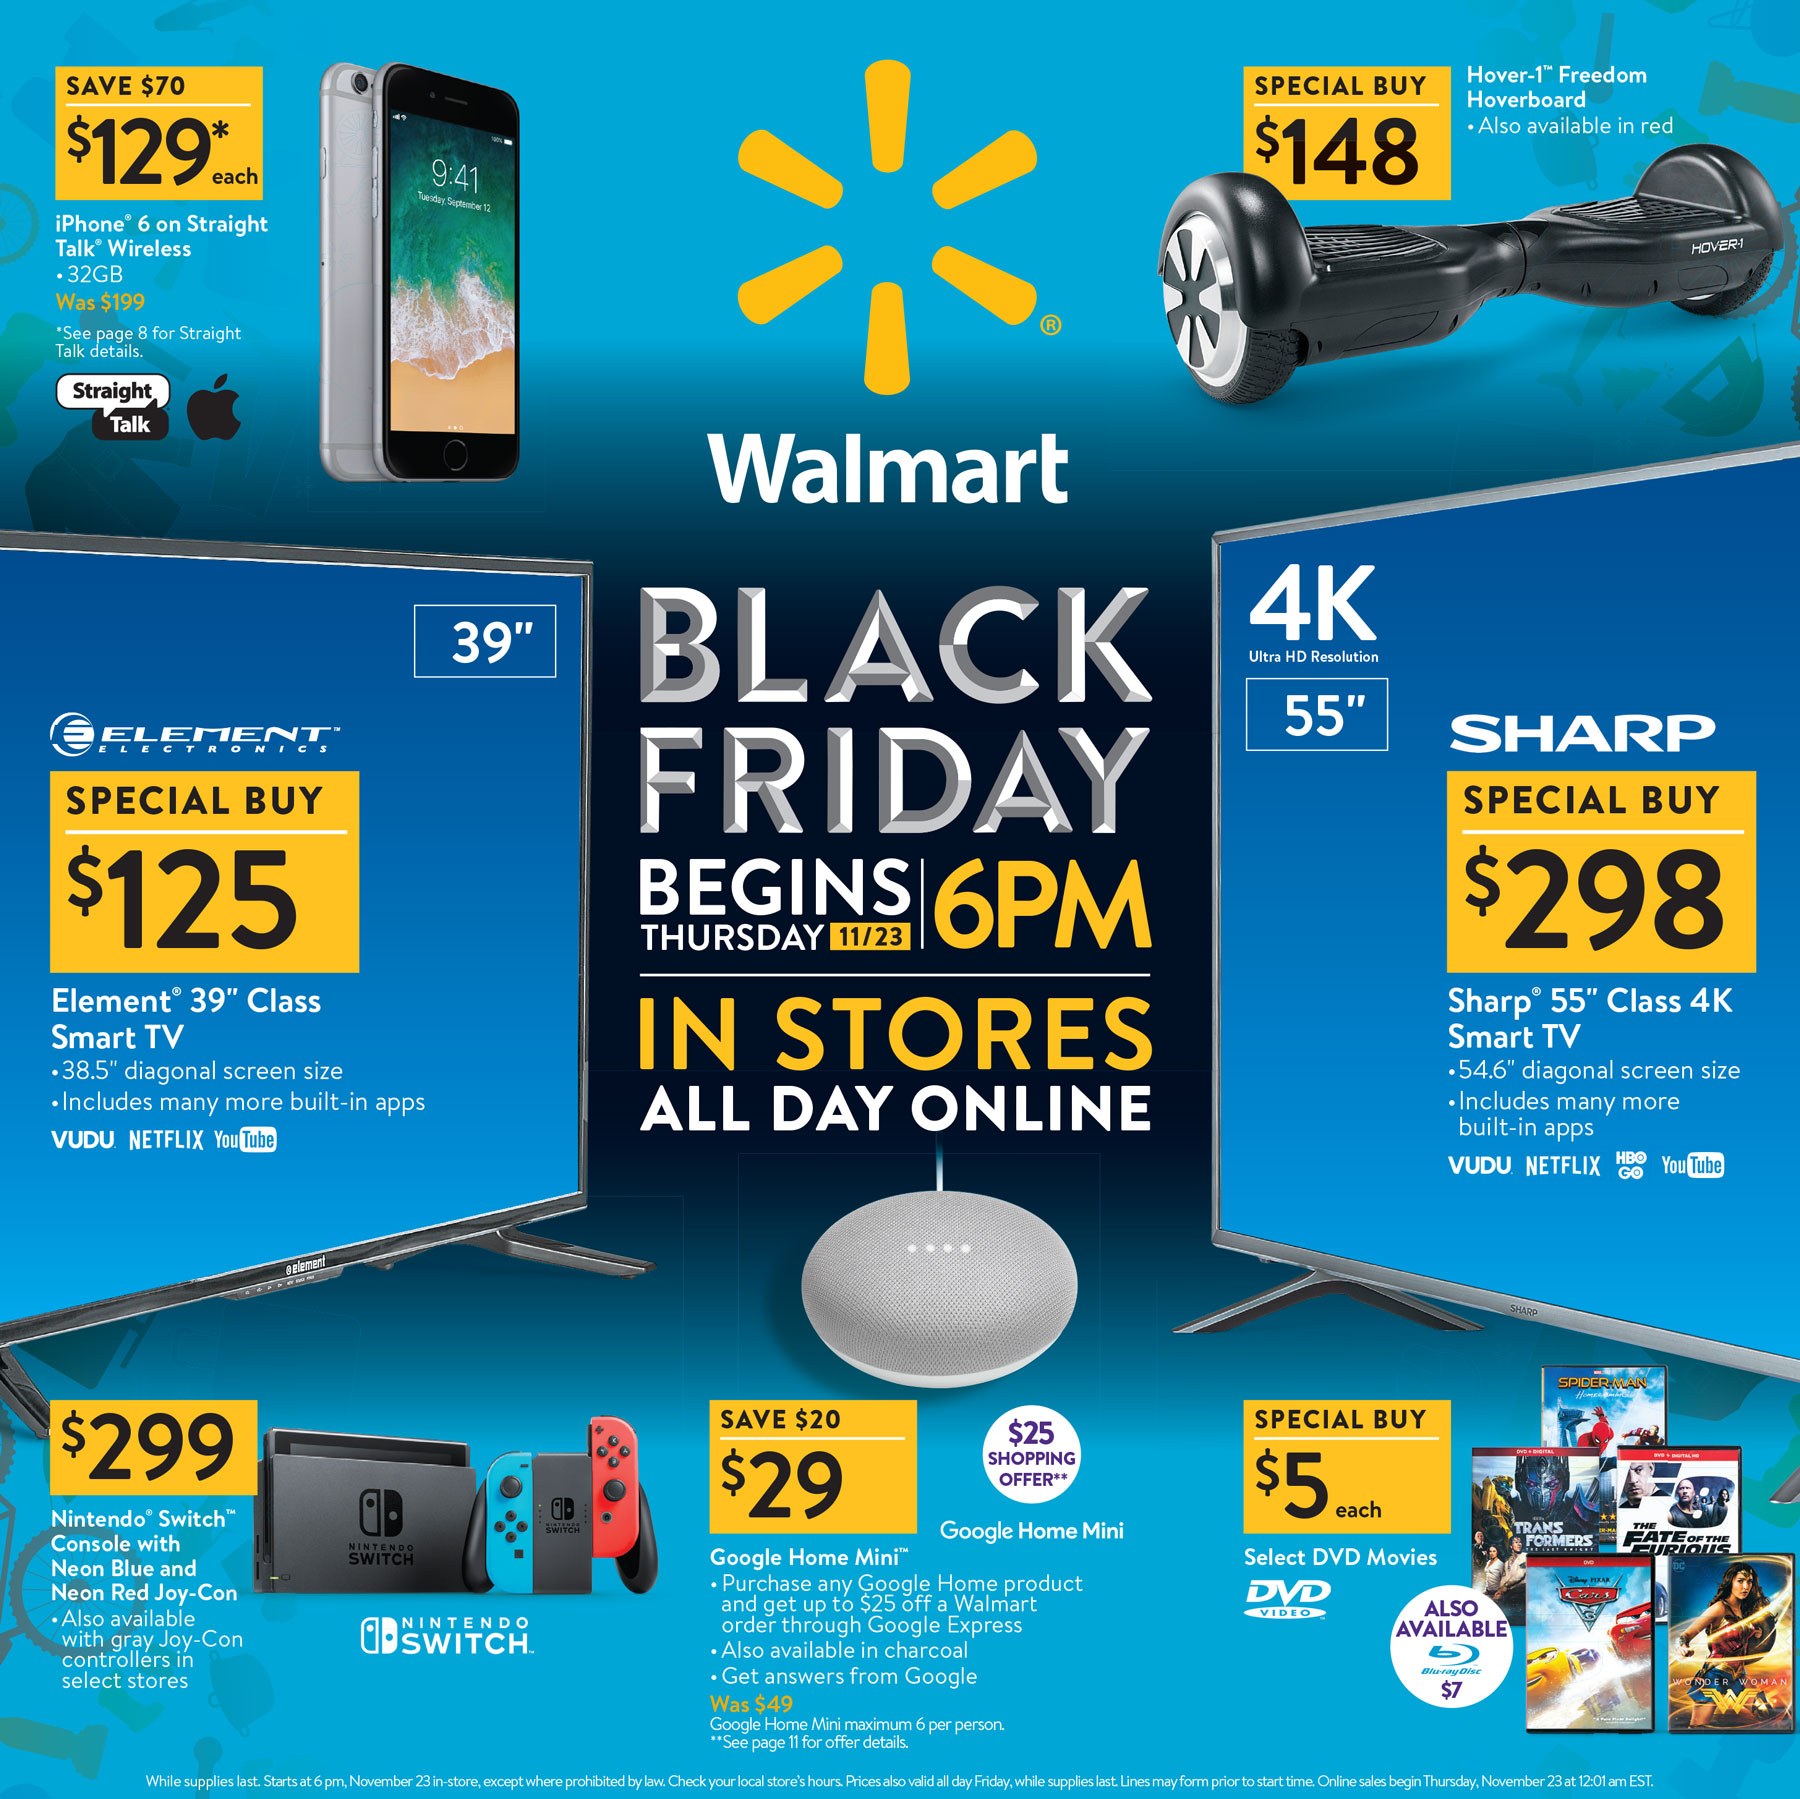 Walmart Offers "Rockin" Black Friday Deals, That Start Now! - What Black Friday Deals Start Now